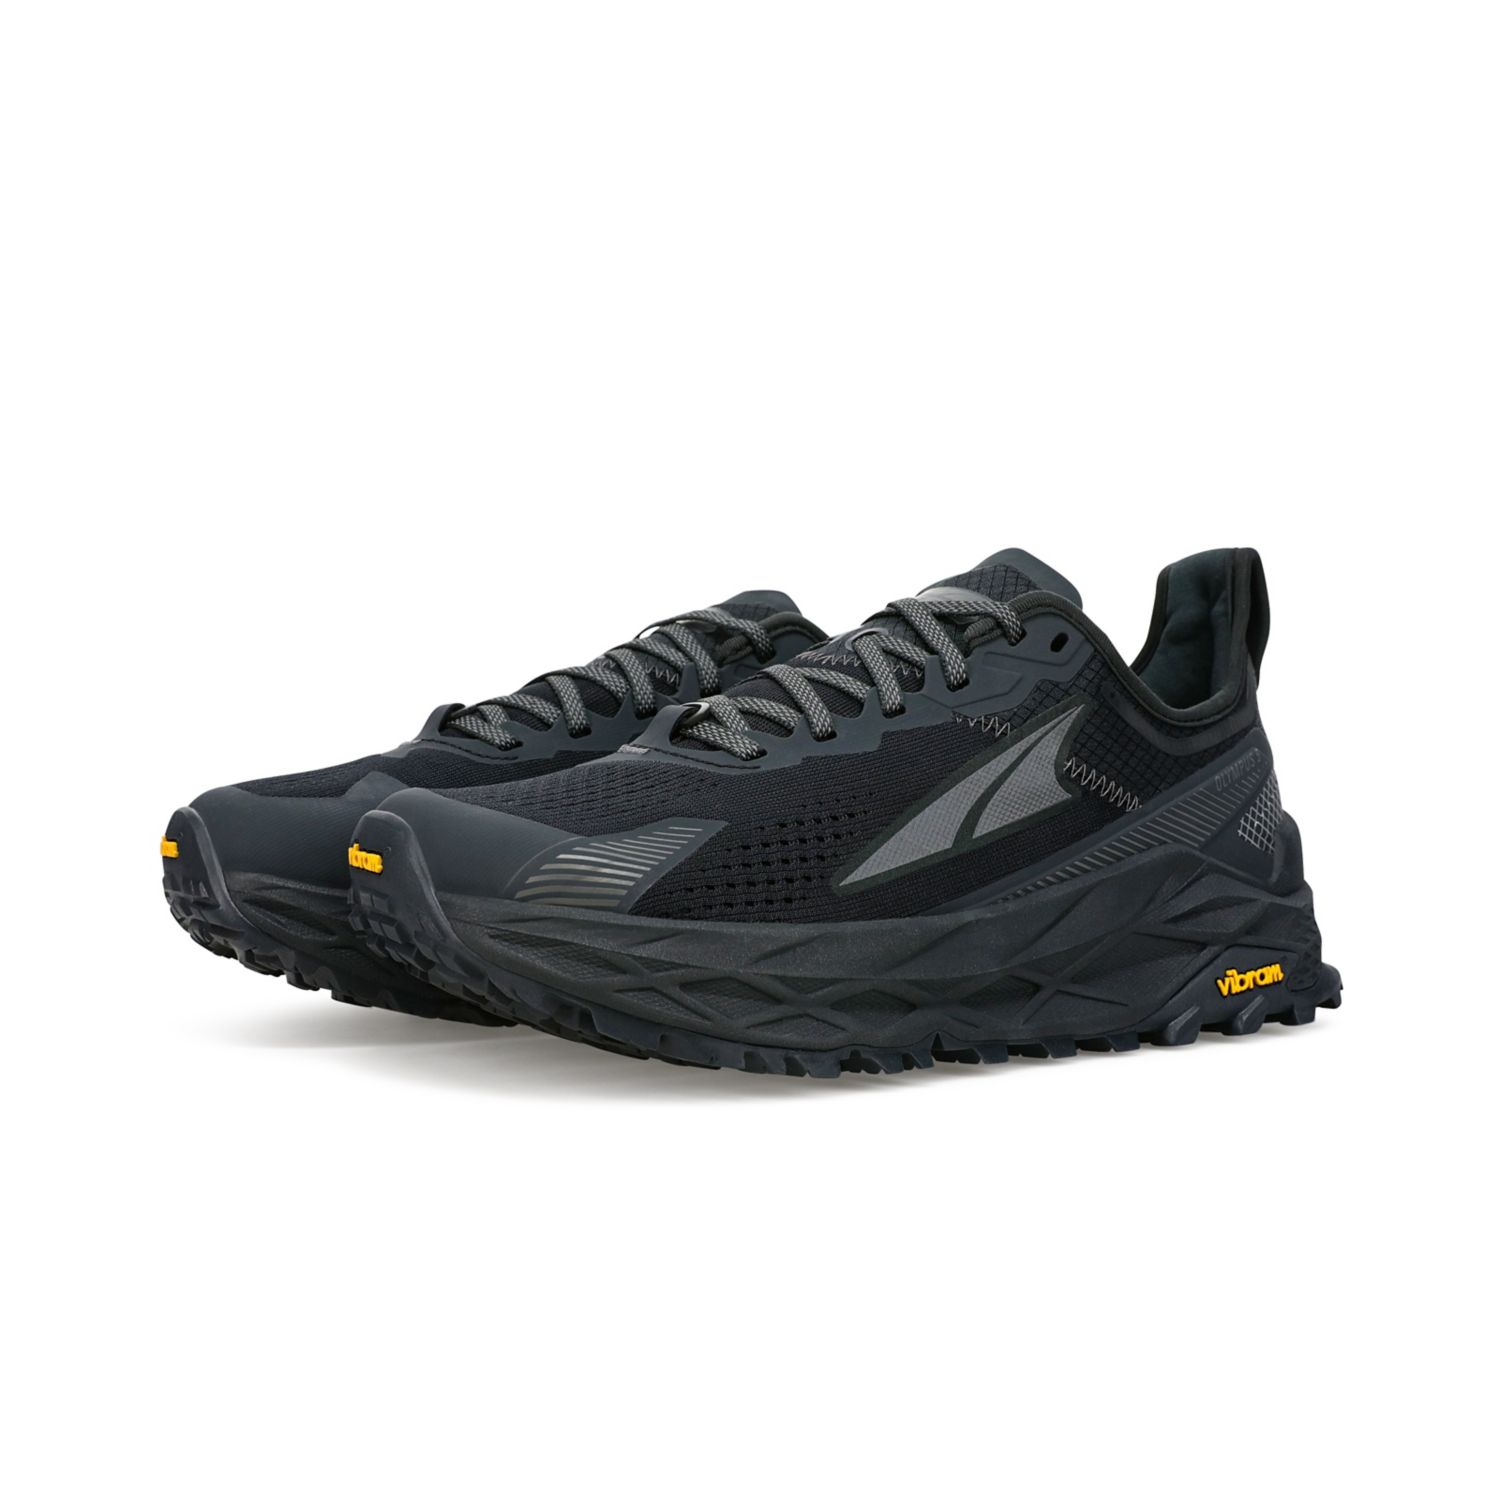 Black / Black Altra Olympus 5 Women's Trail Running Shoes | Ireland-37940529